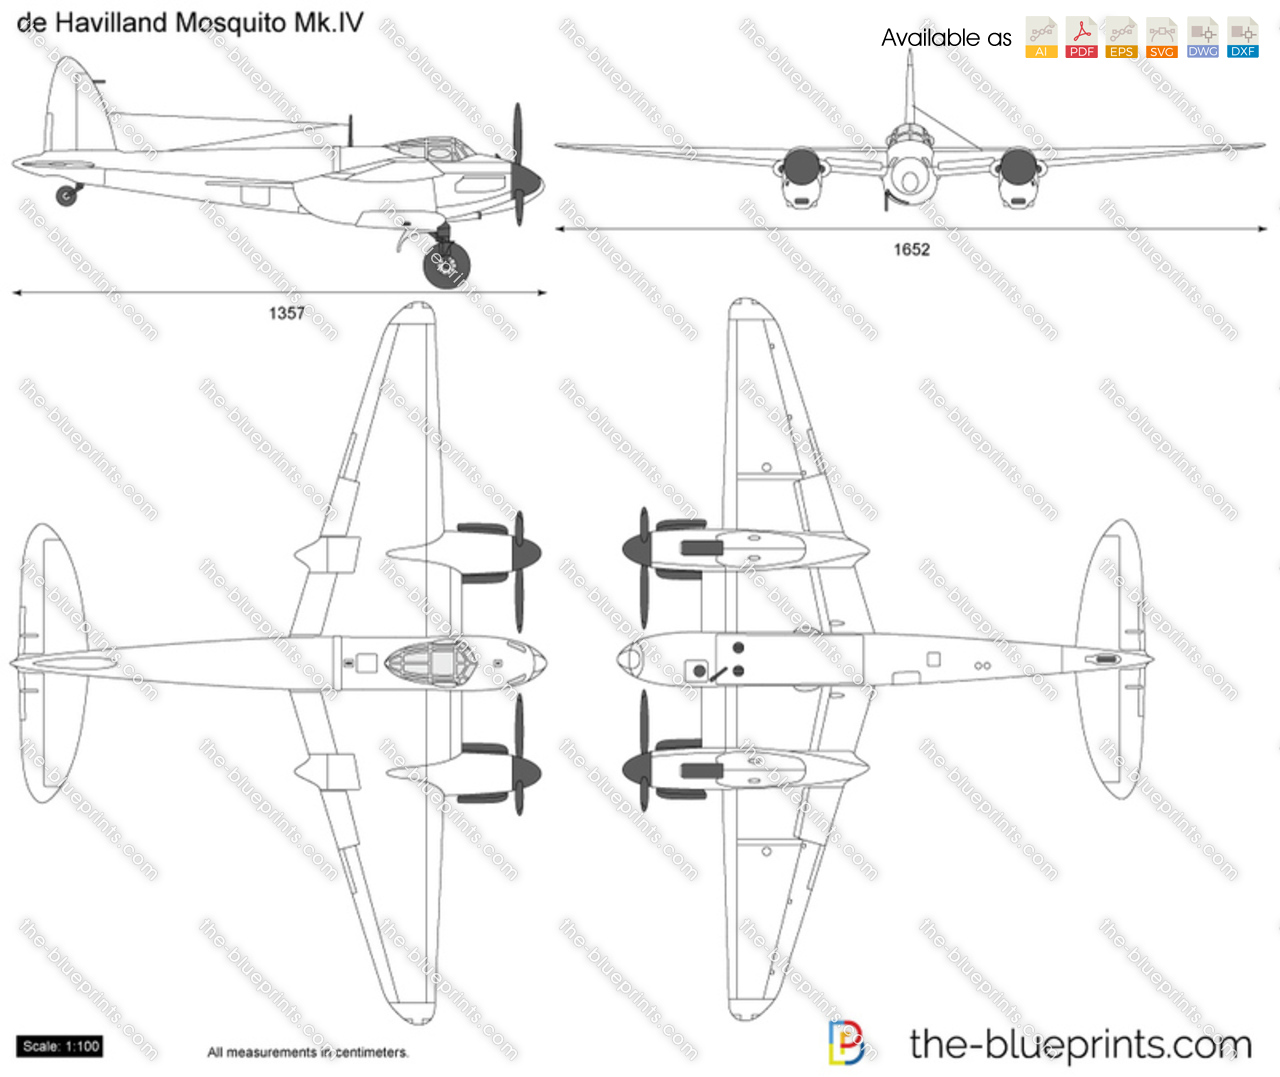 de Havilland Mosquito Mk.IV